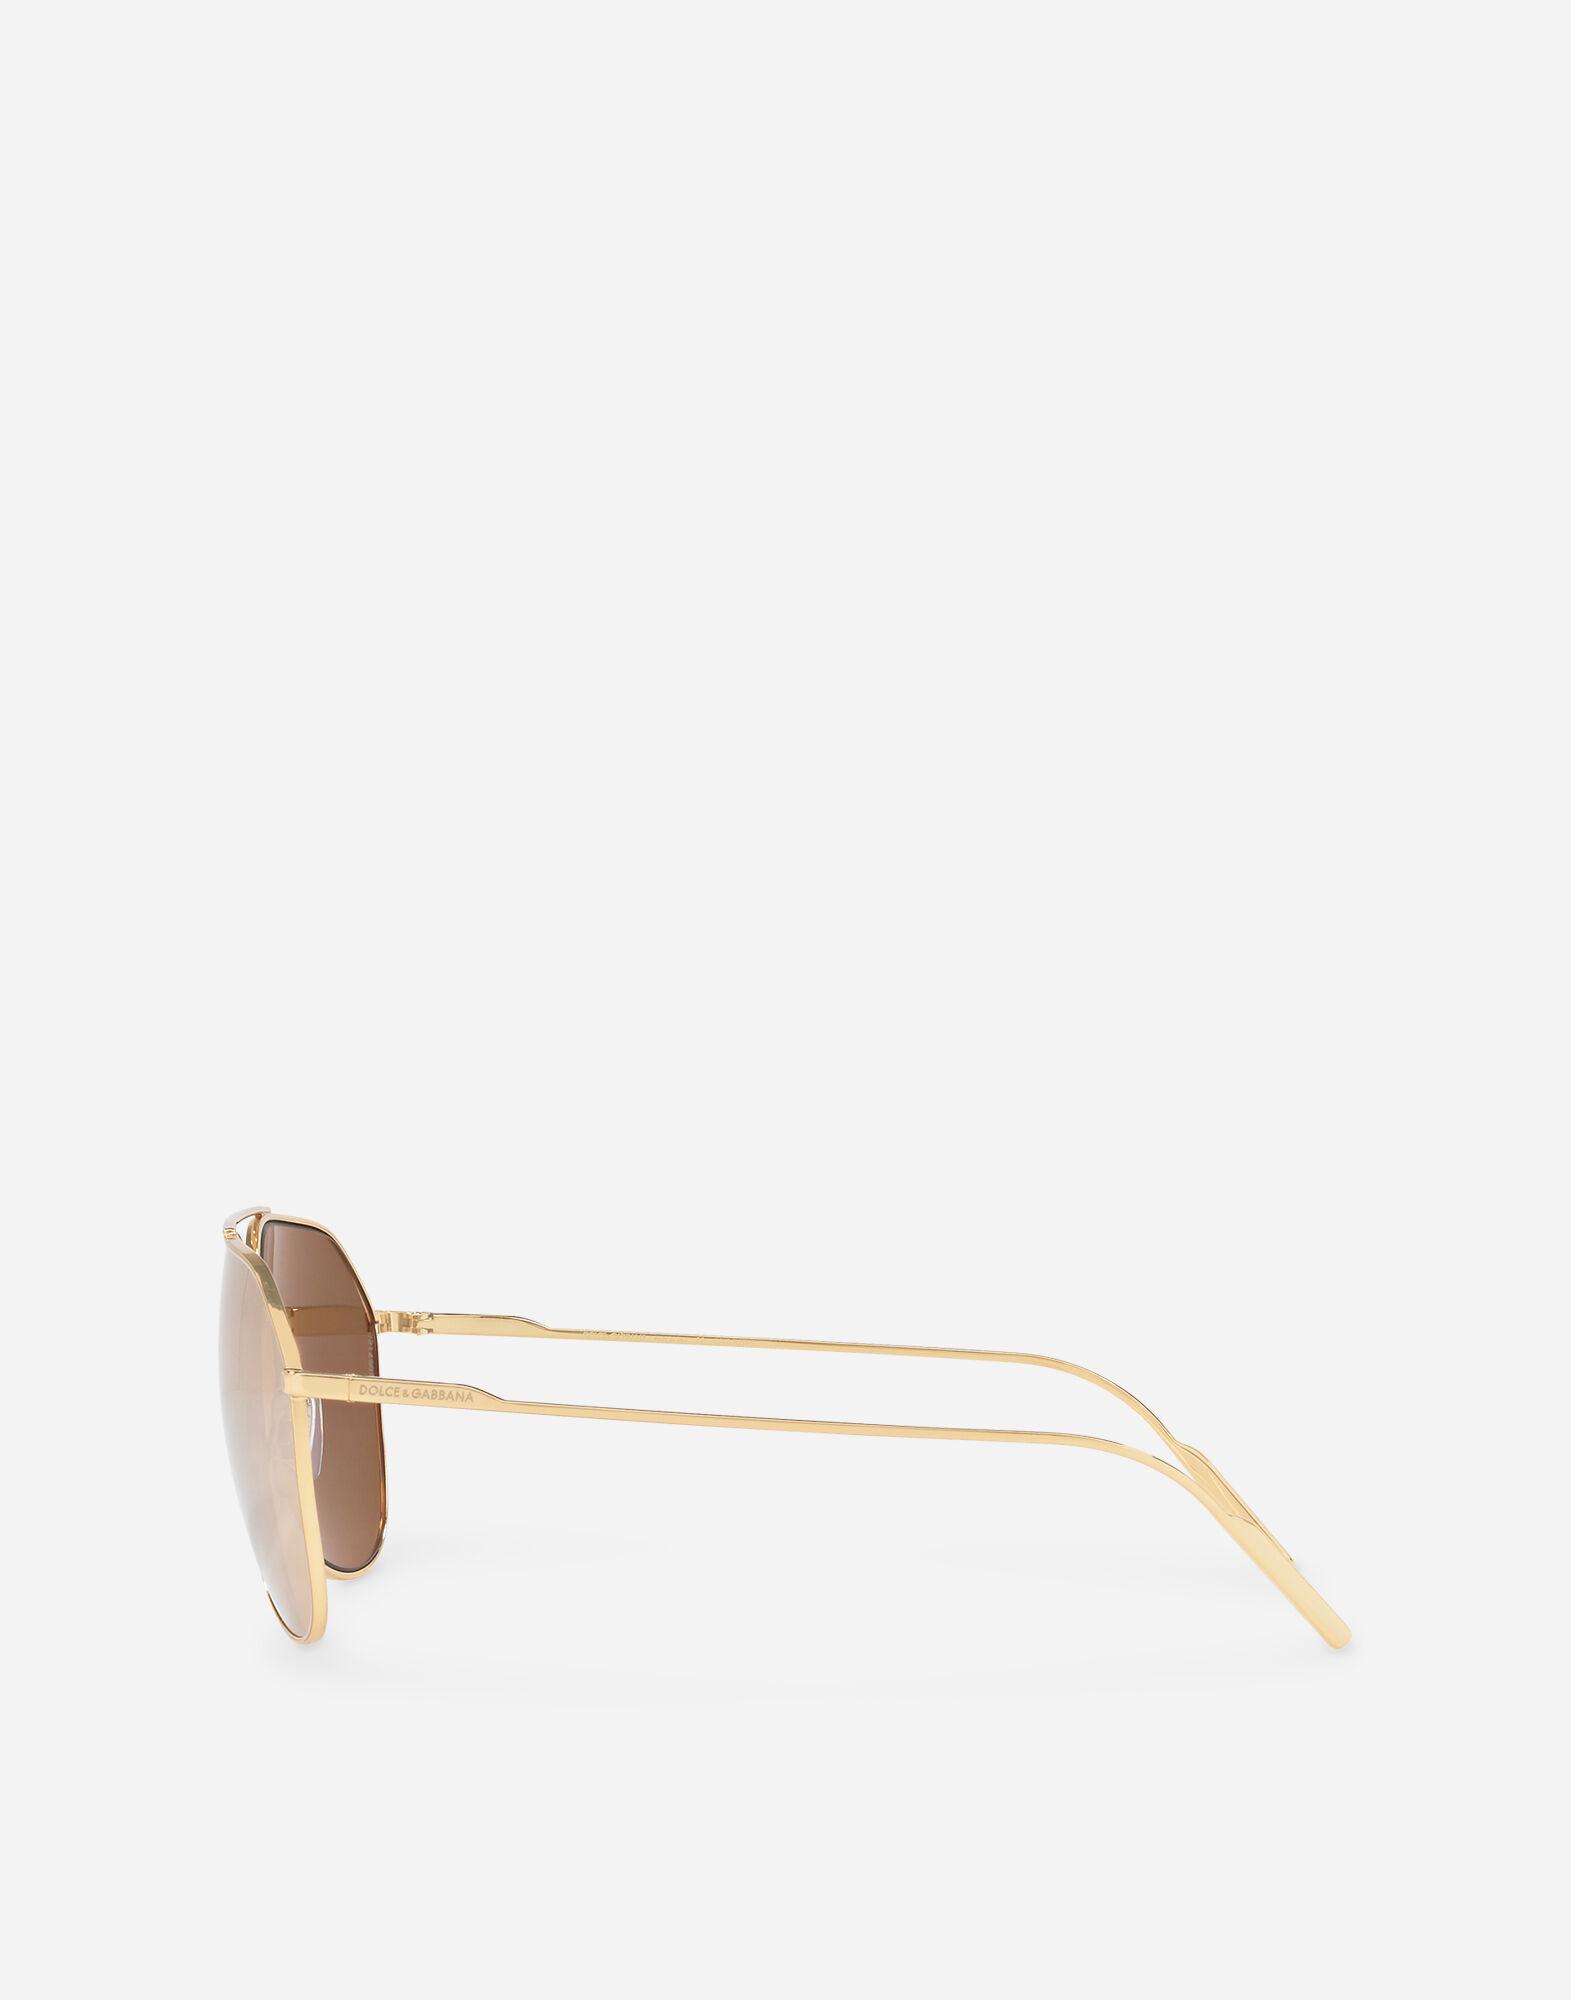 Dolce & Gabbana Gold Edition Sunglasses in Metallic for Men - Lyst